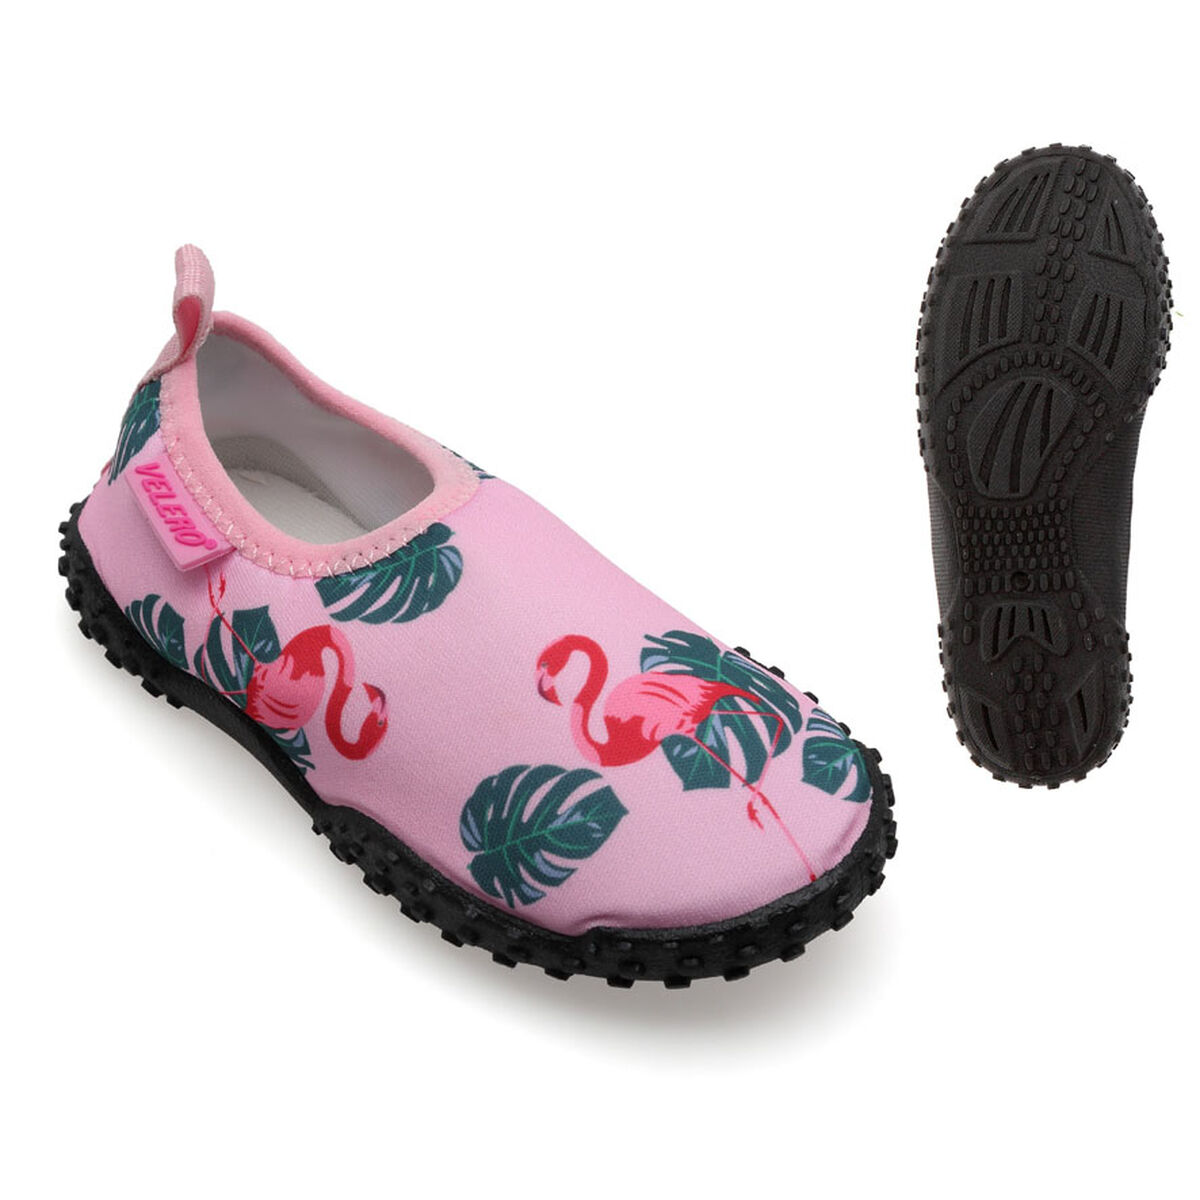 Botoși pentru Copii Flamingo Roz - Mărime la picior 34